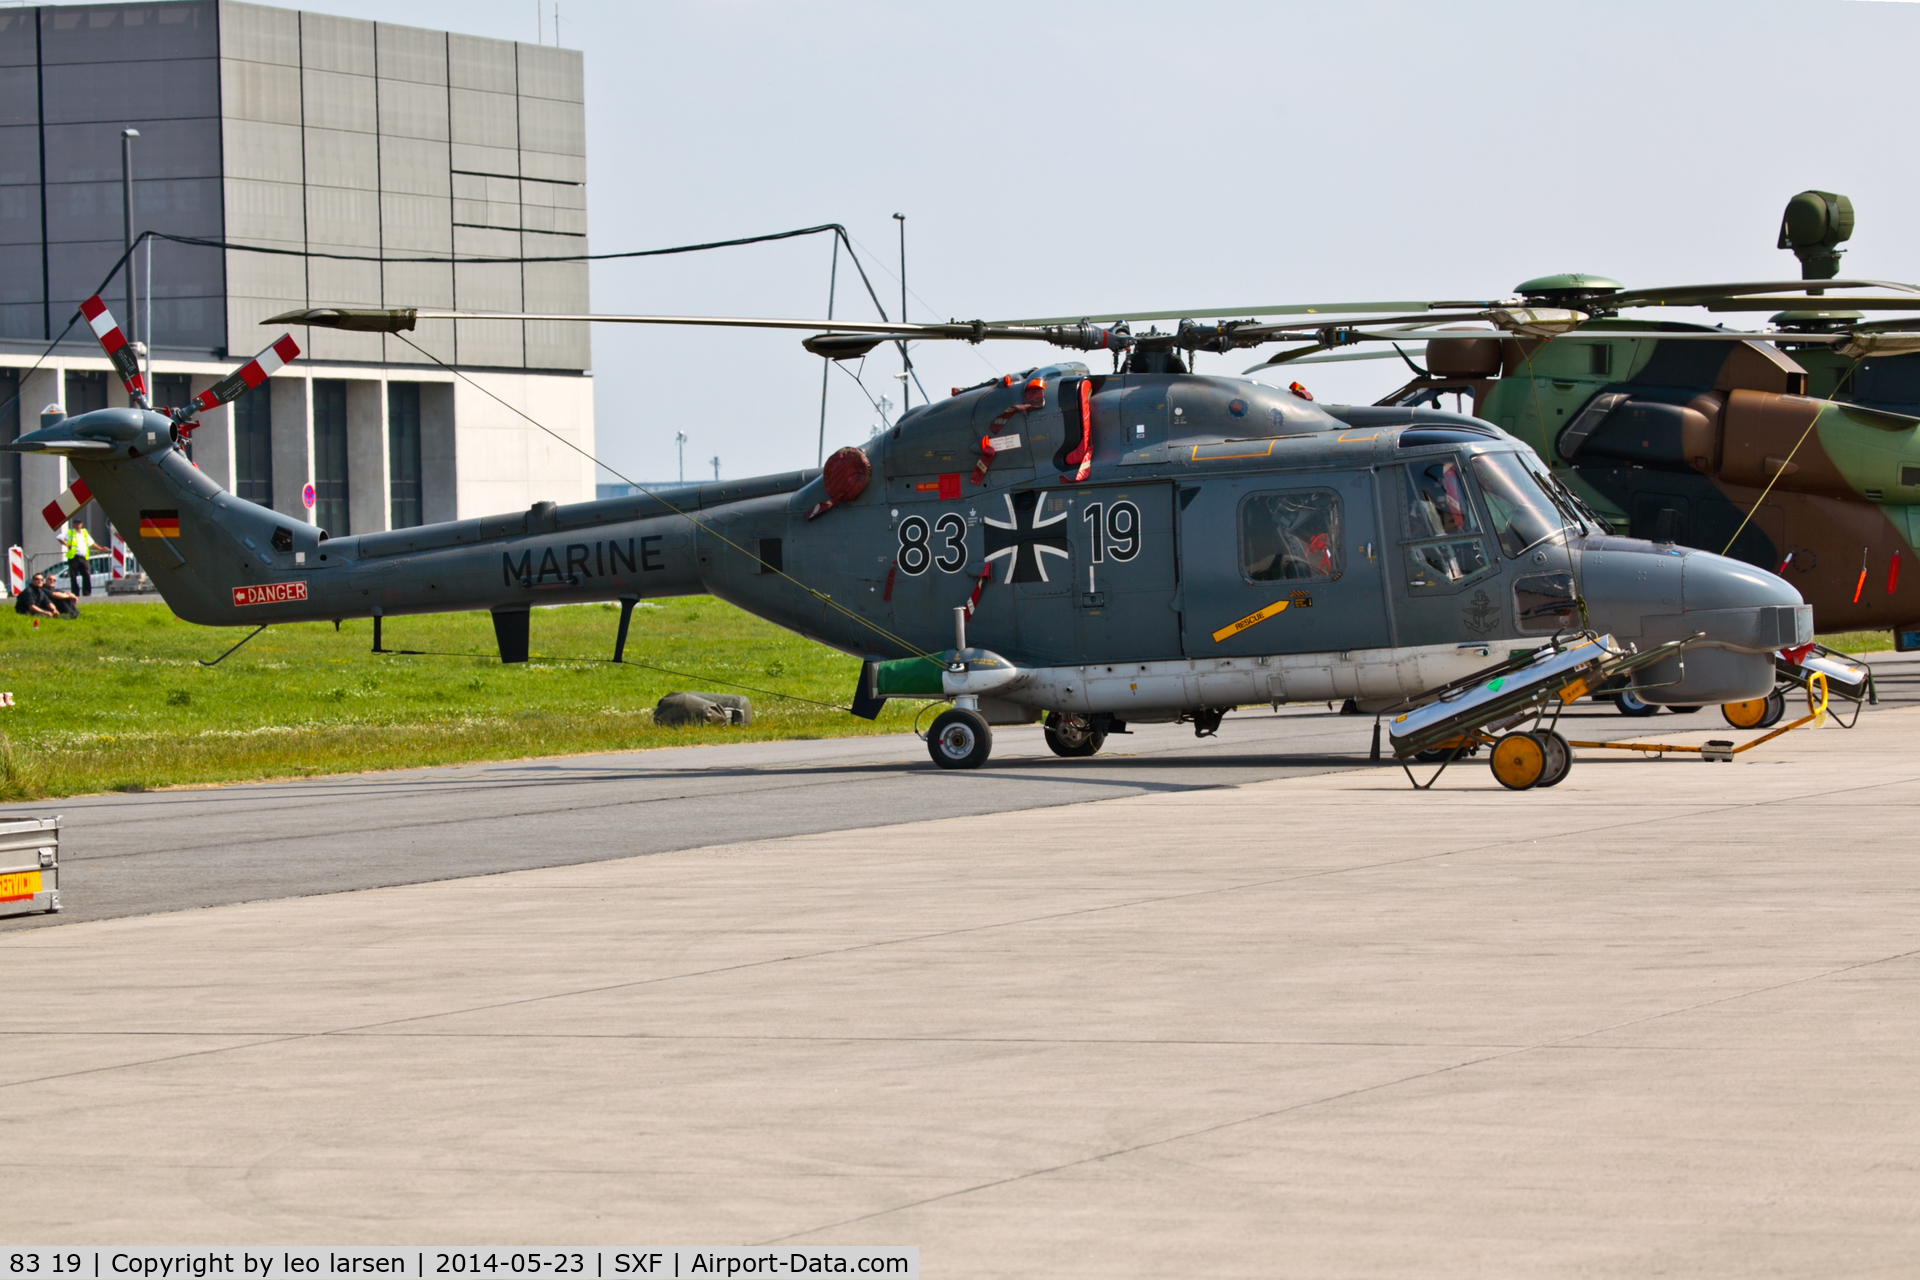 83 19, 1992 Westland Super Lynx Mk.88A C/N 413, Ber-in Air Show 23.5.2014